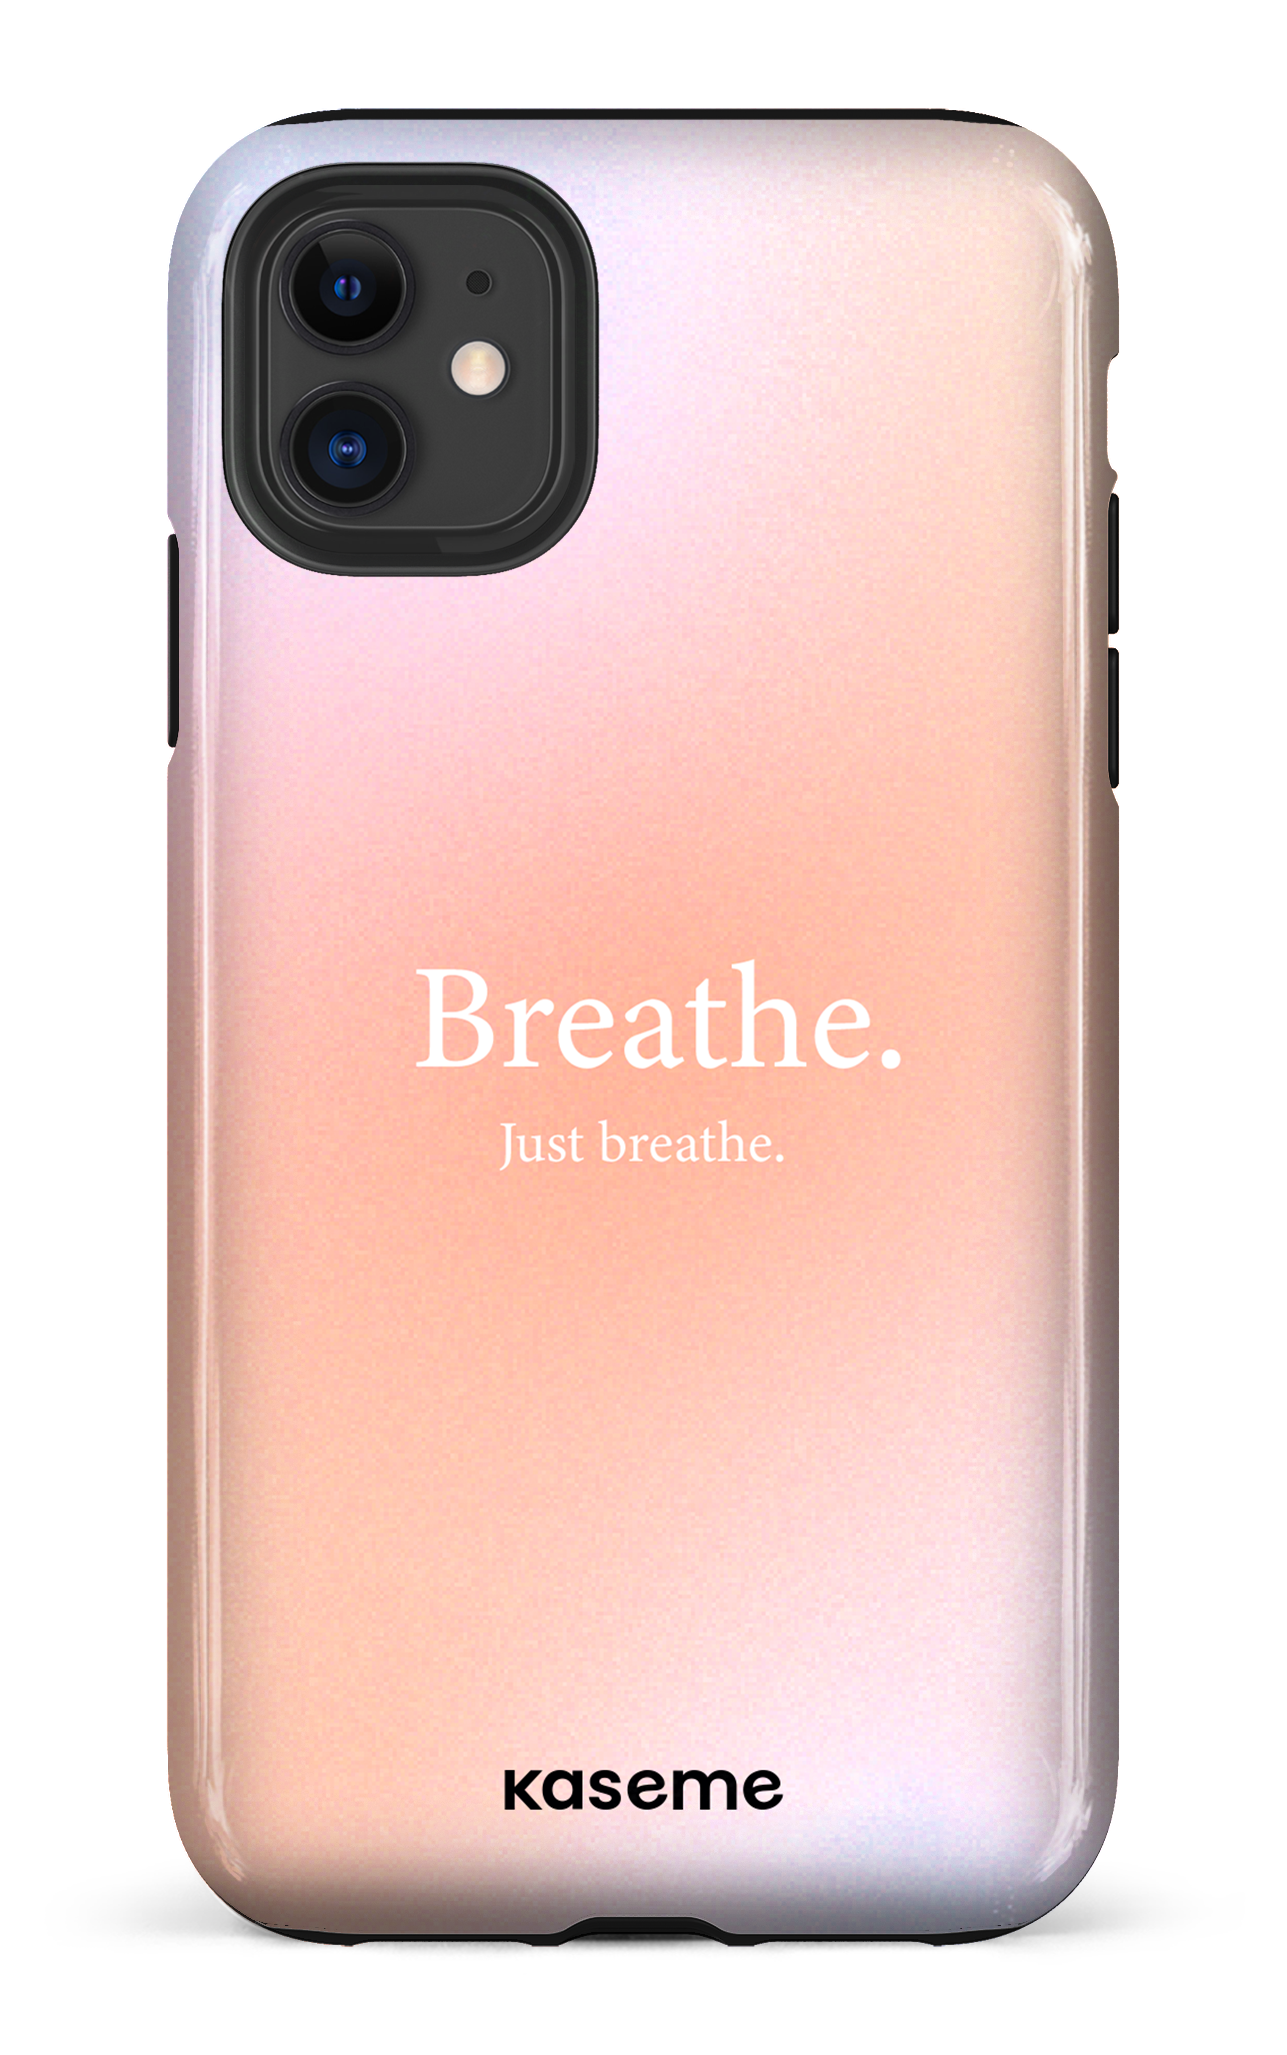 Just breathe - iPhone 11